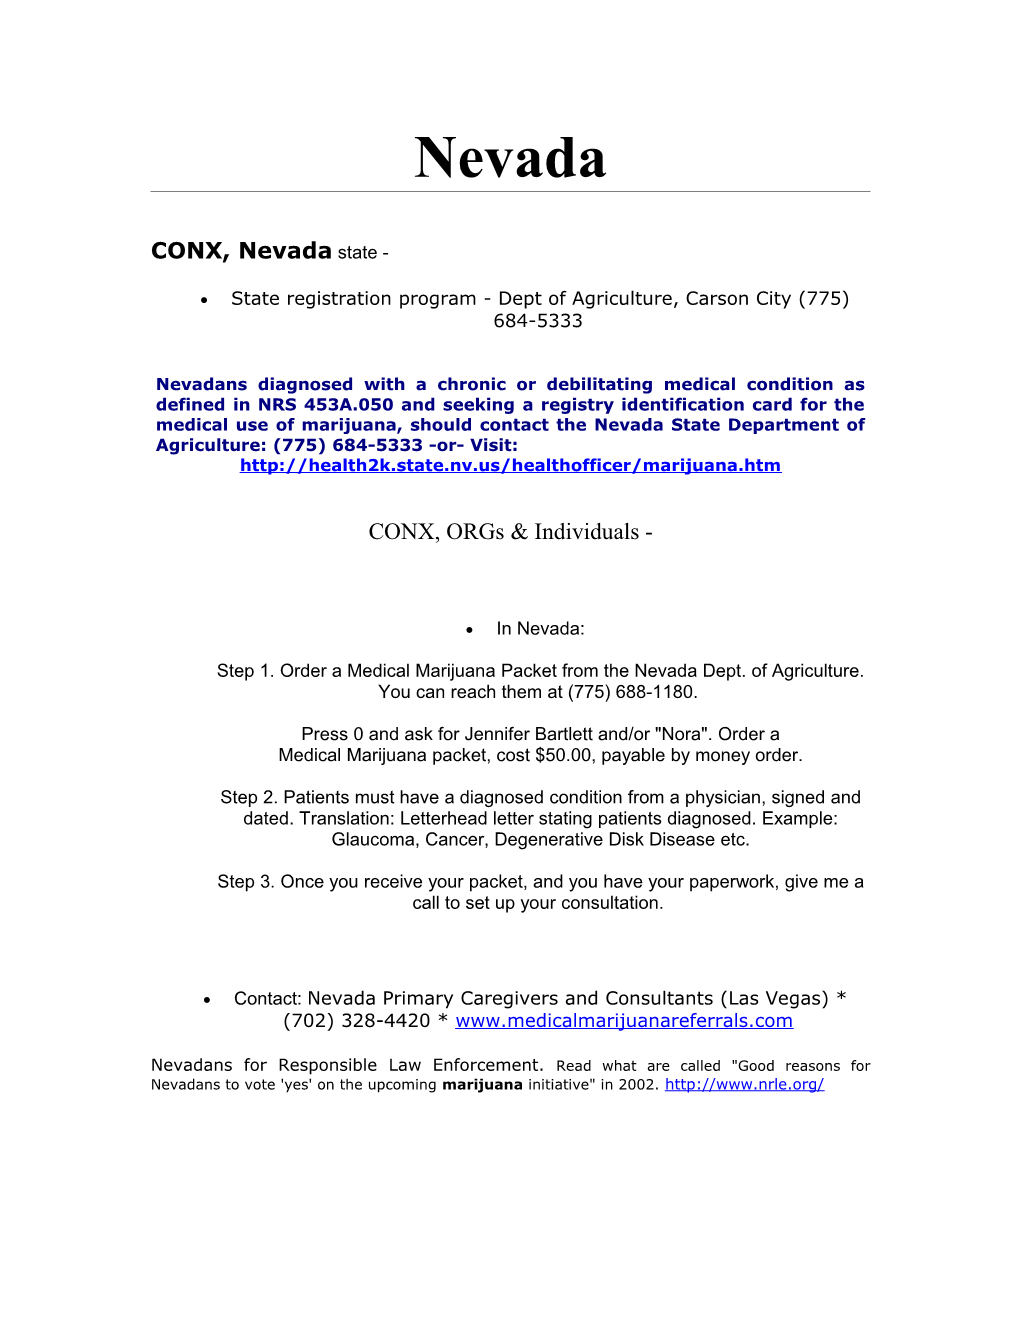 State Registration Program - Dept of Agriculture, Carson City (775) 684-5333